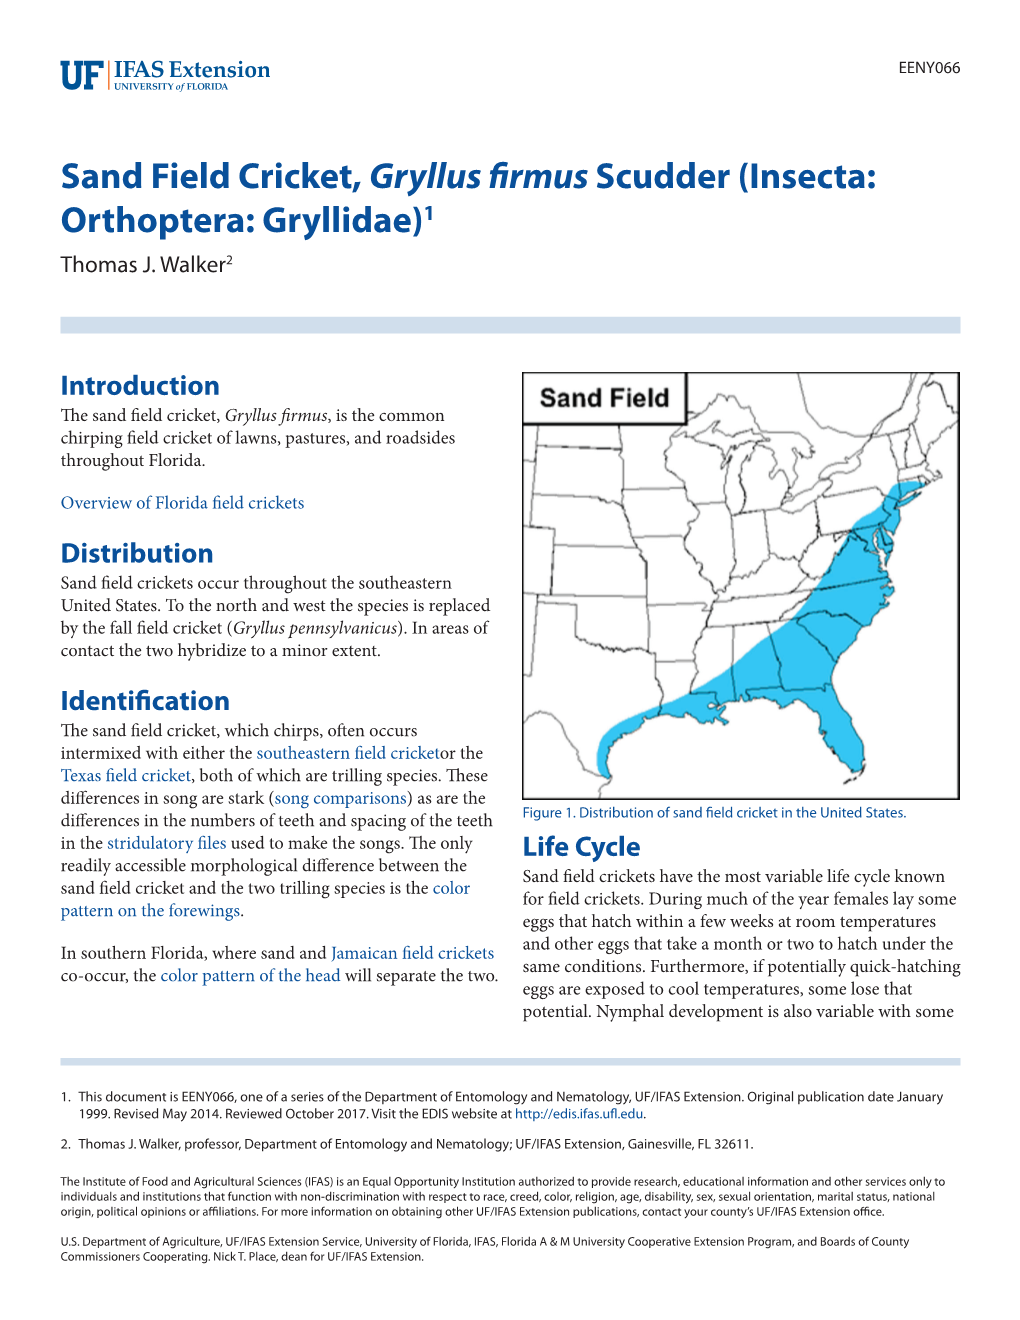 Sand Field Cricket, Gryllus Firmus Scudder (Insecta: Orthoptera: Gryllidae)1 Thomas J